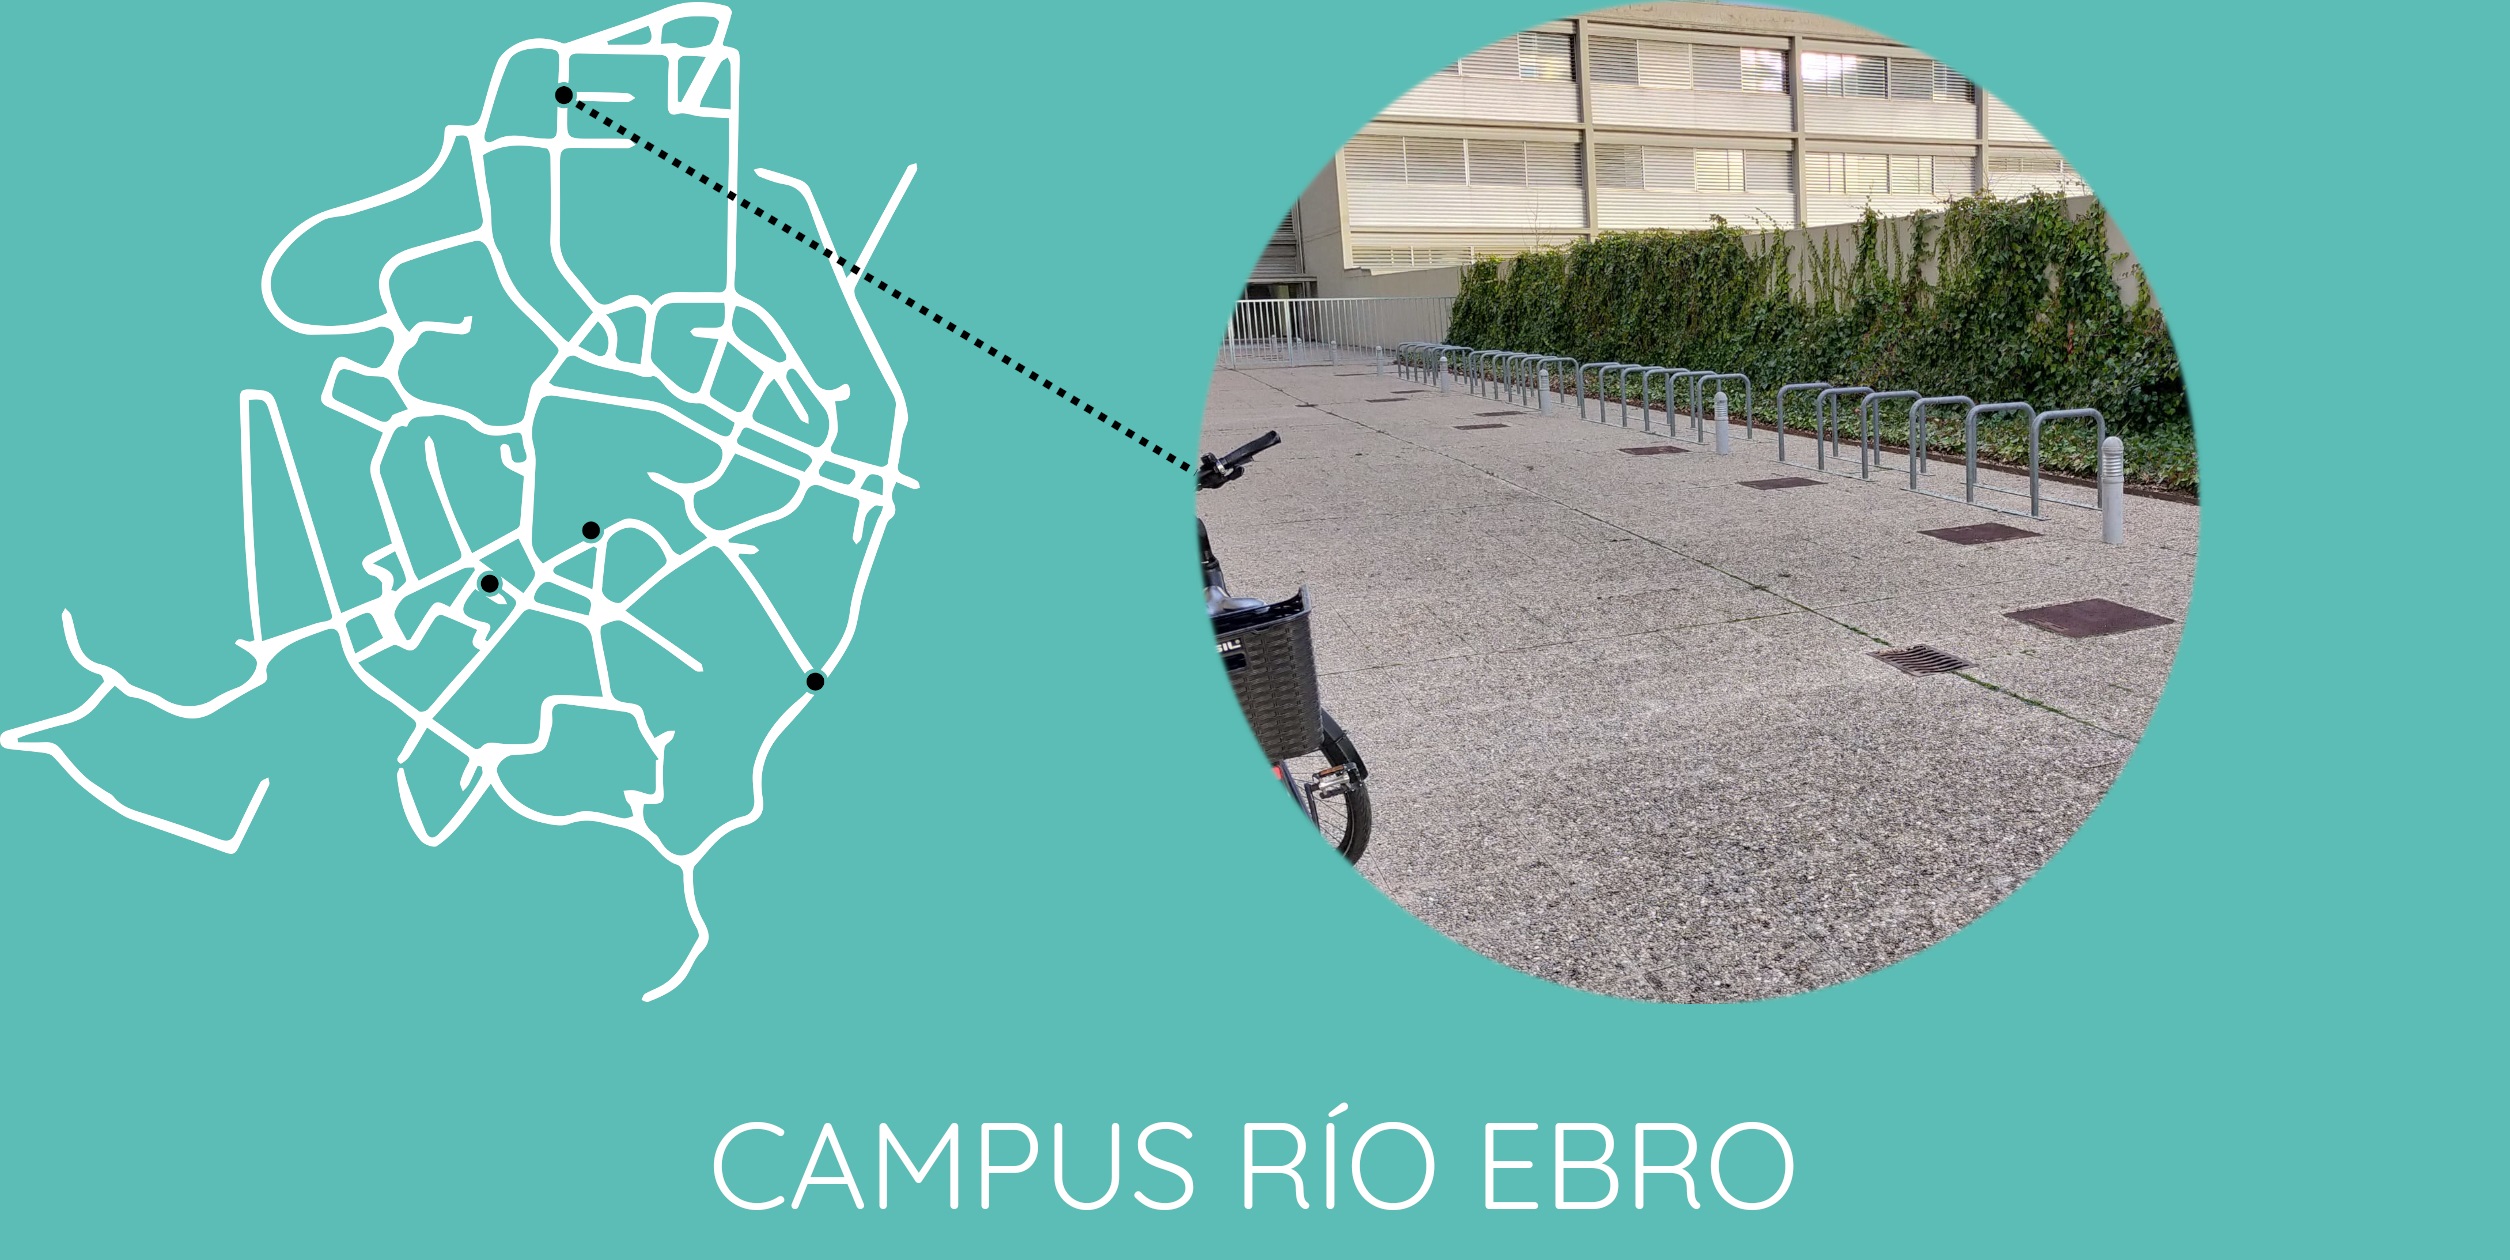 Campus Rio Ebro